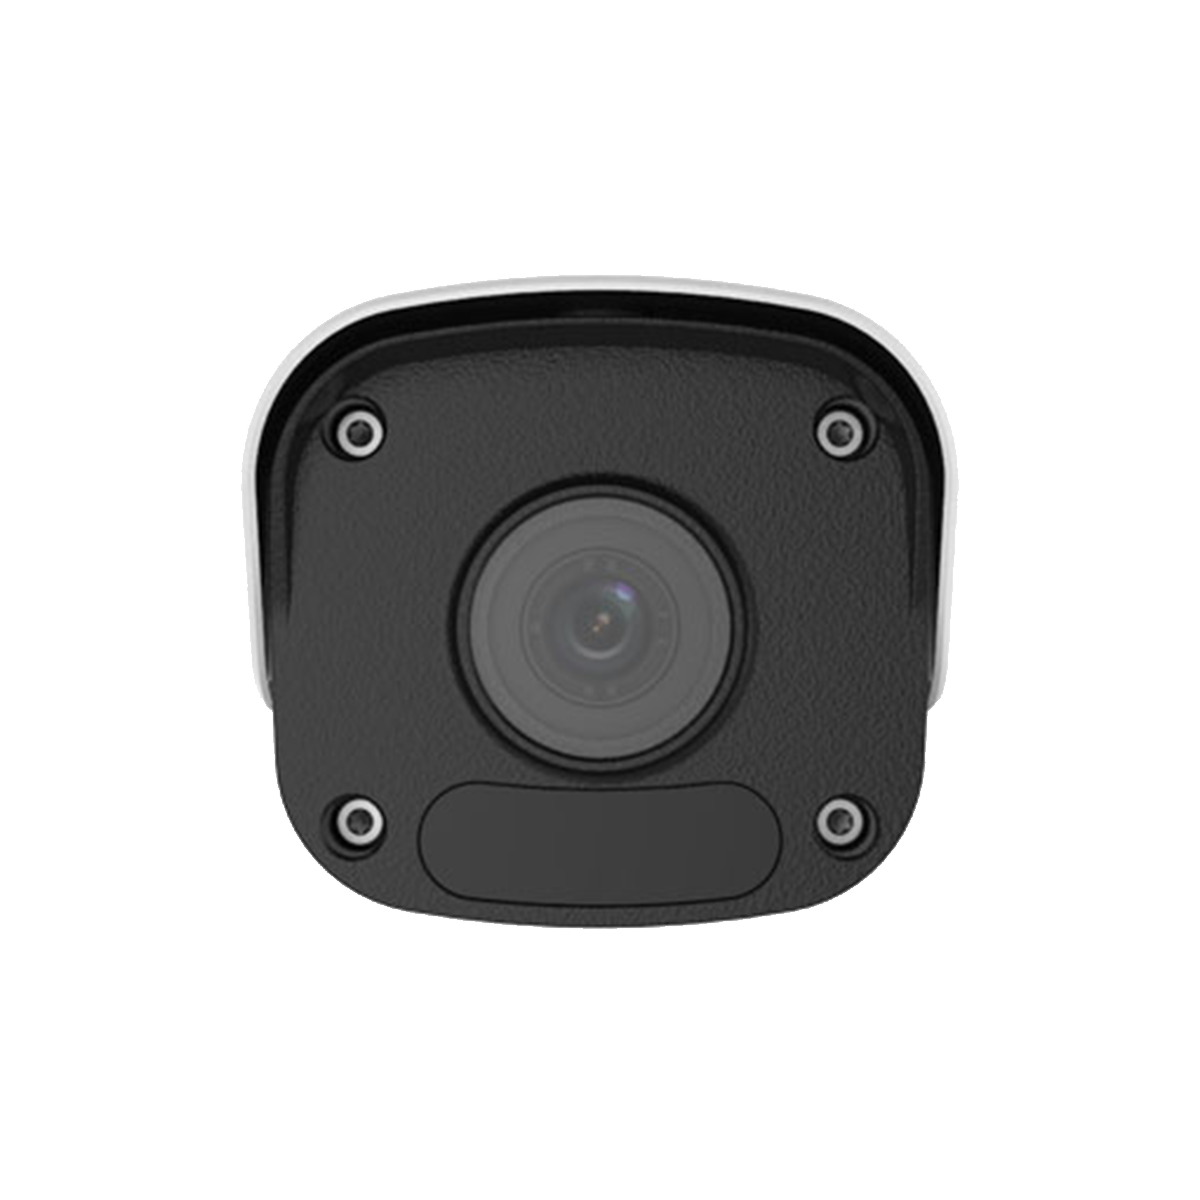 5MP Mini Fixed Bullet Network Camera